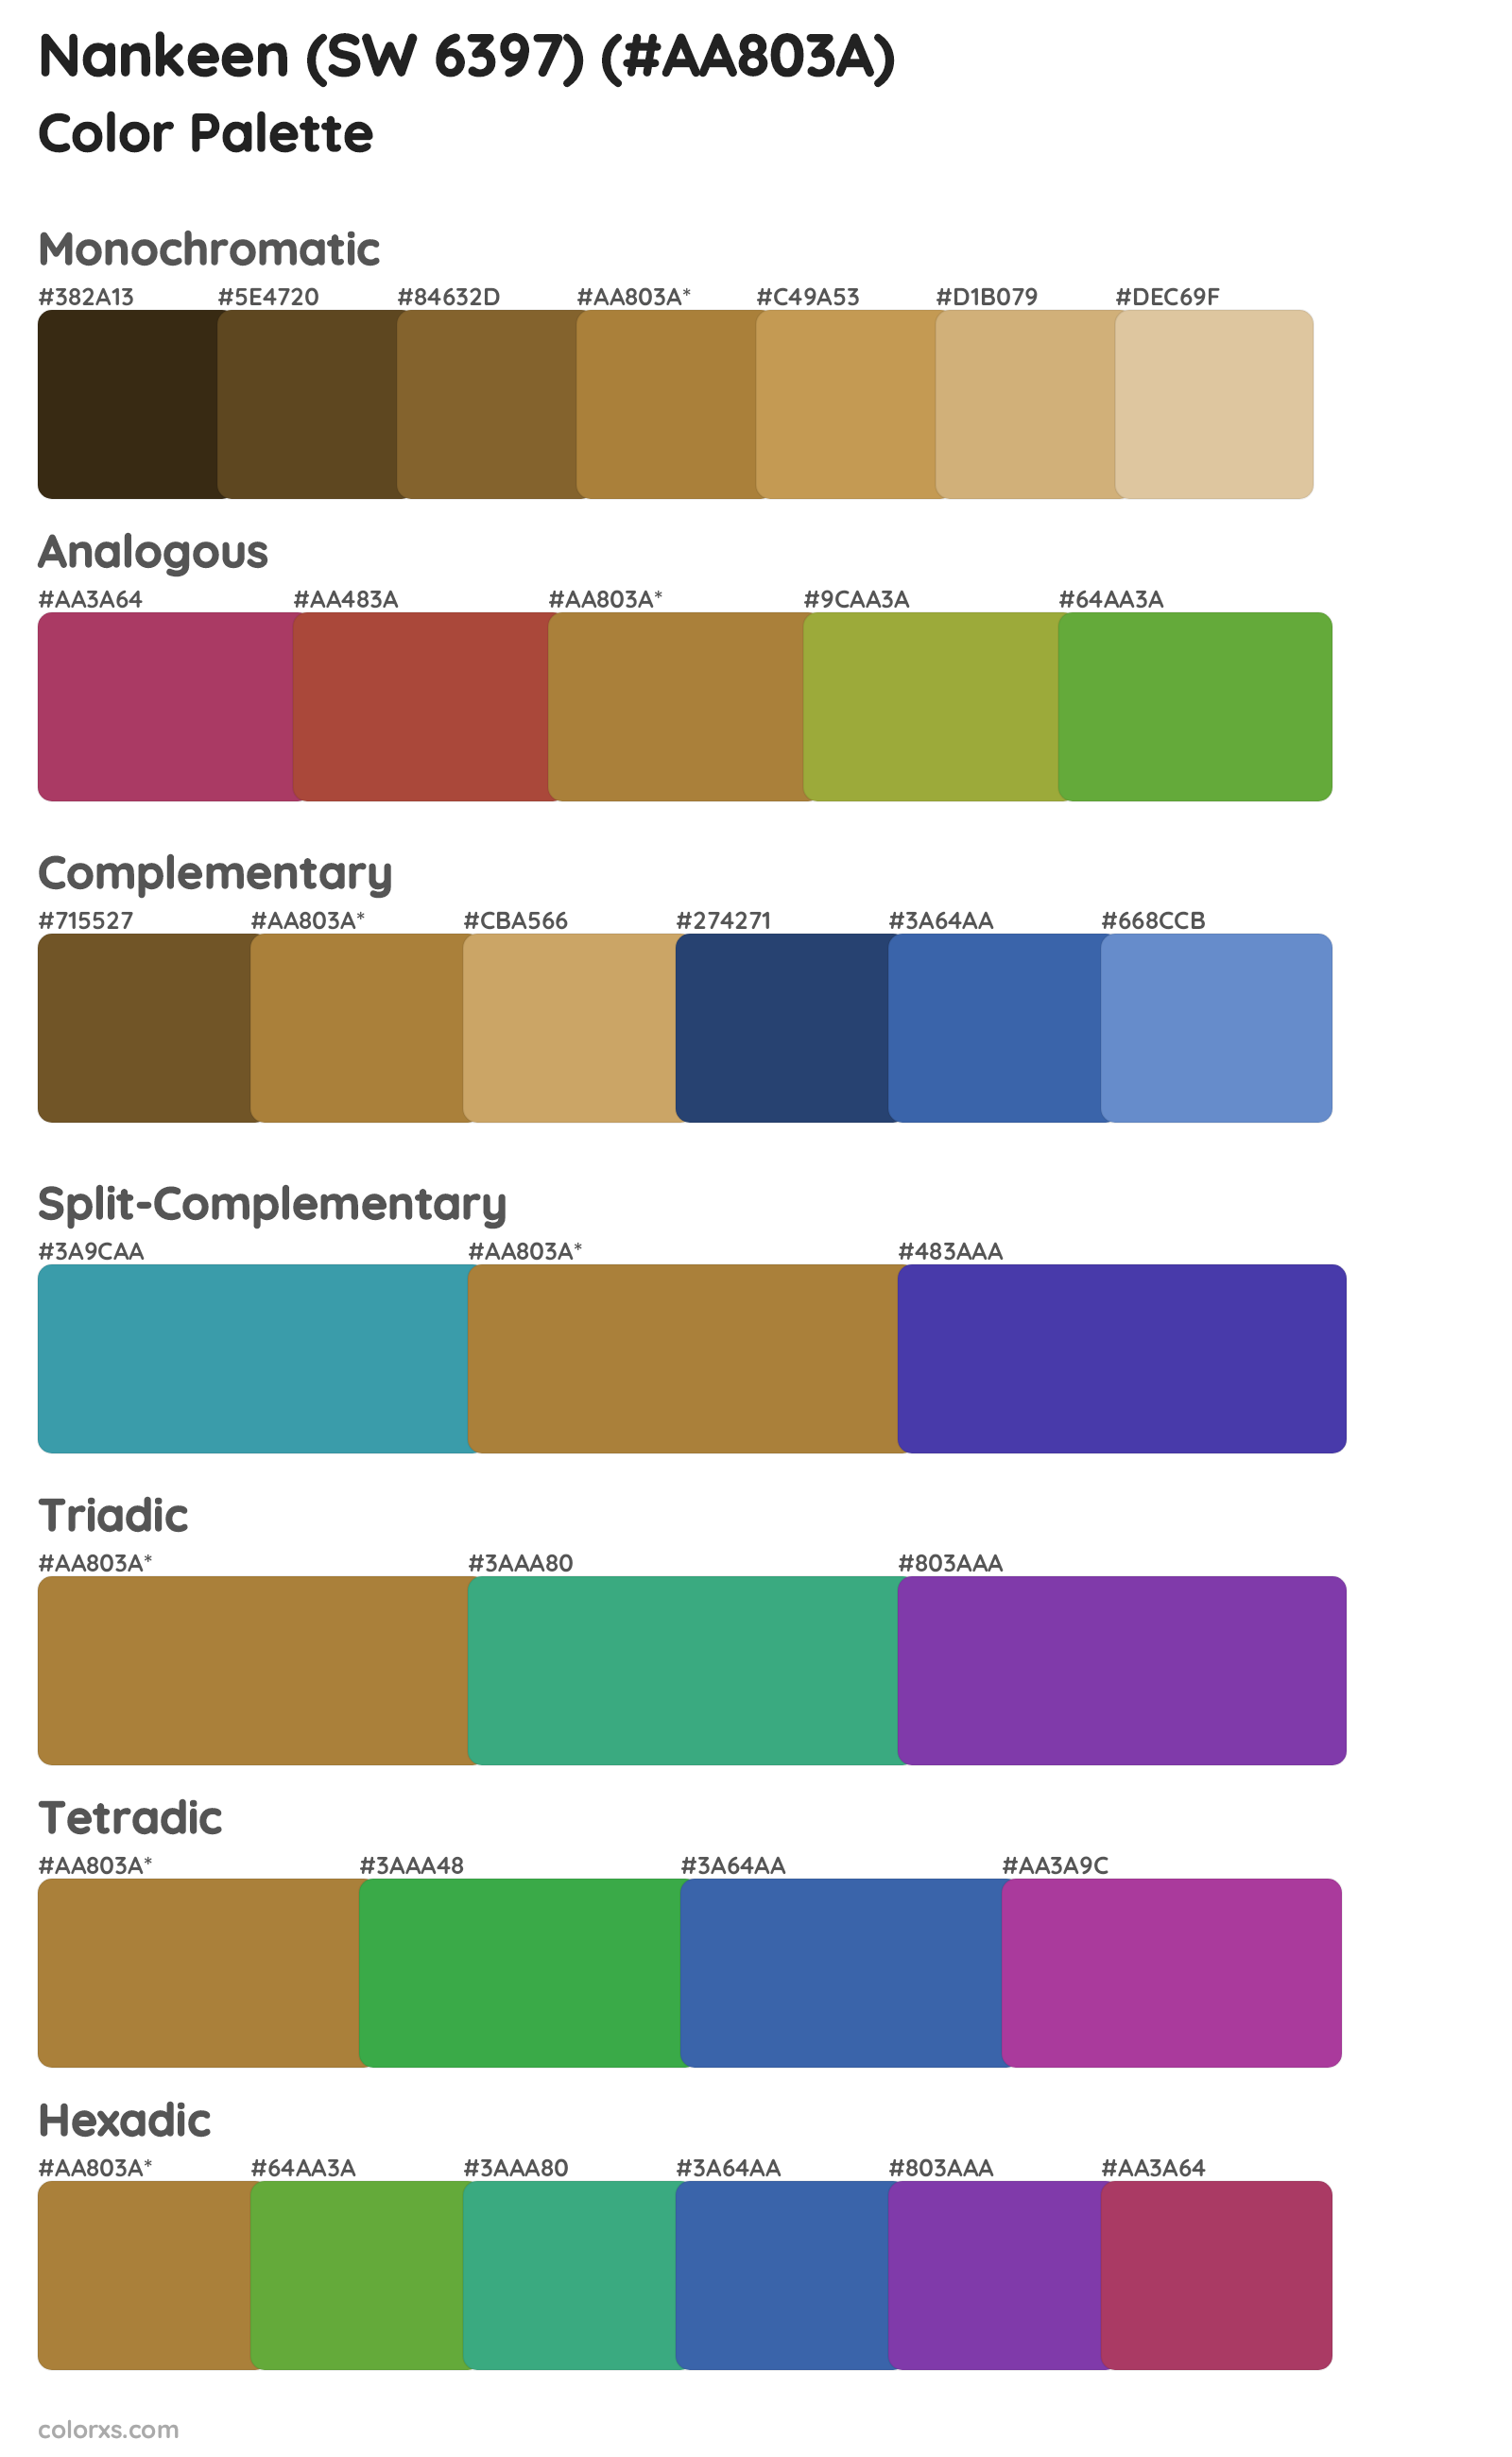 Nankeen (SW 6397) Color Scheme Palettes